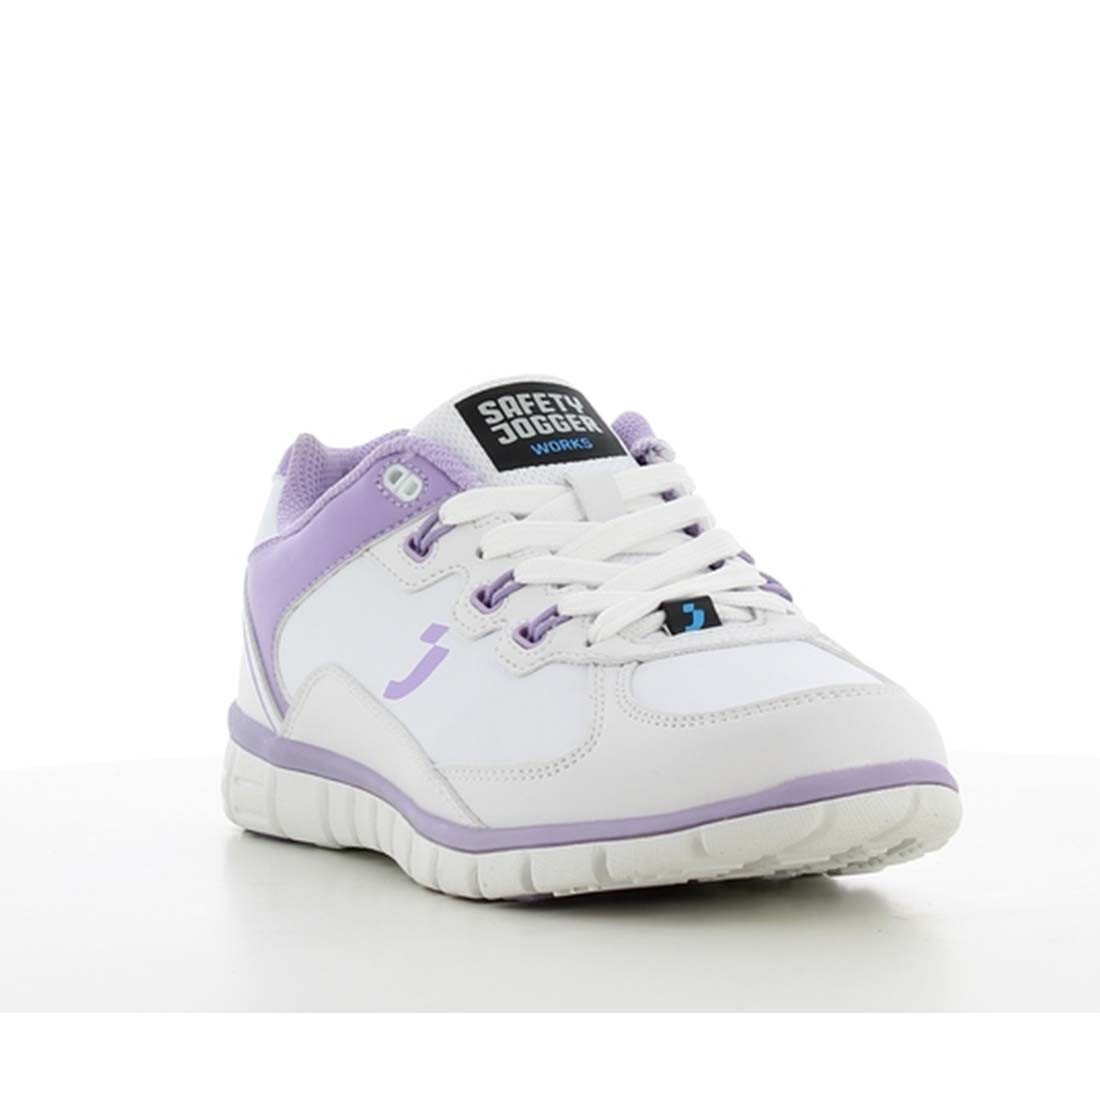 Adidasi sport dama SUNNY OB - Incaltaminte de protectie | Bocanci, Pantofi, Sandale, Cizme